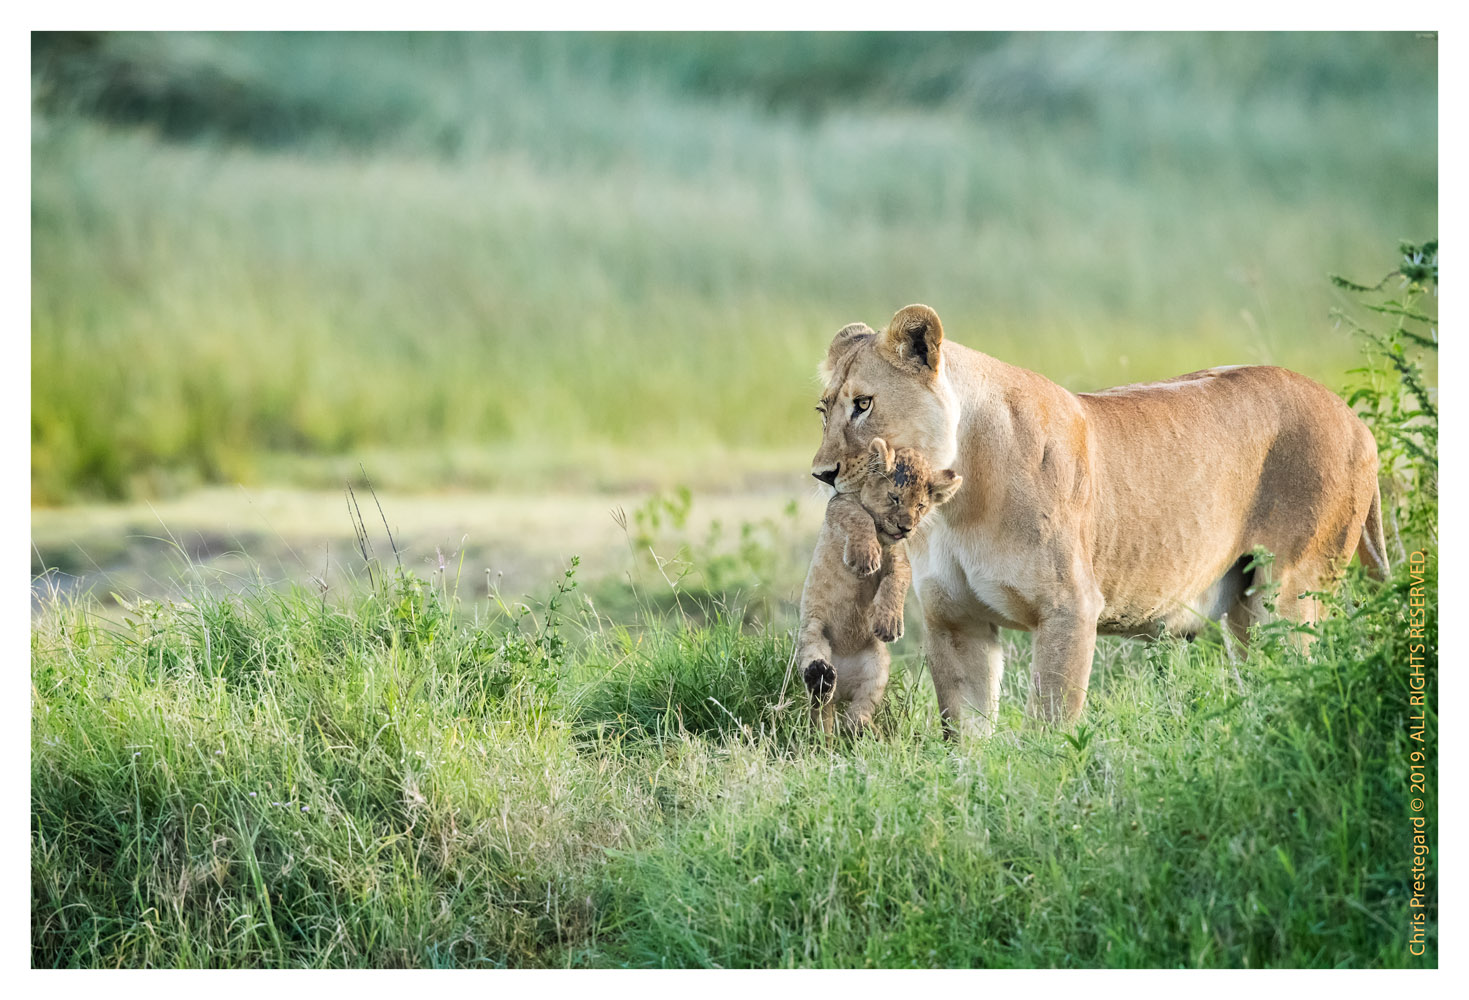 Lion cubs at Ndutu, Tanzania Feb. 2019